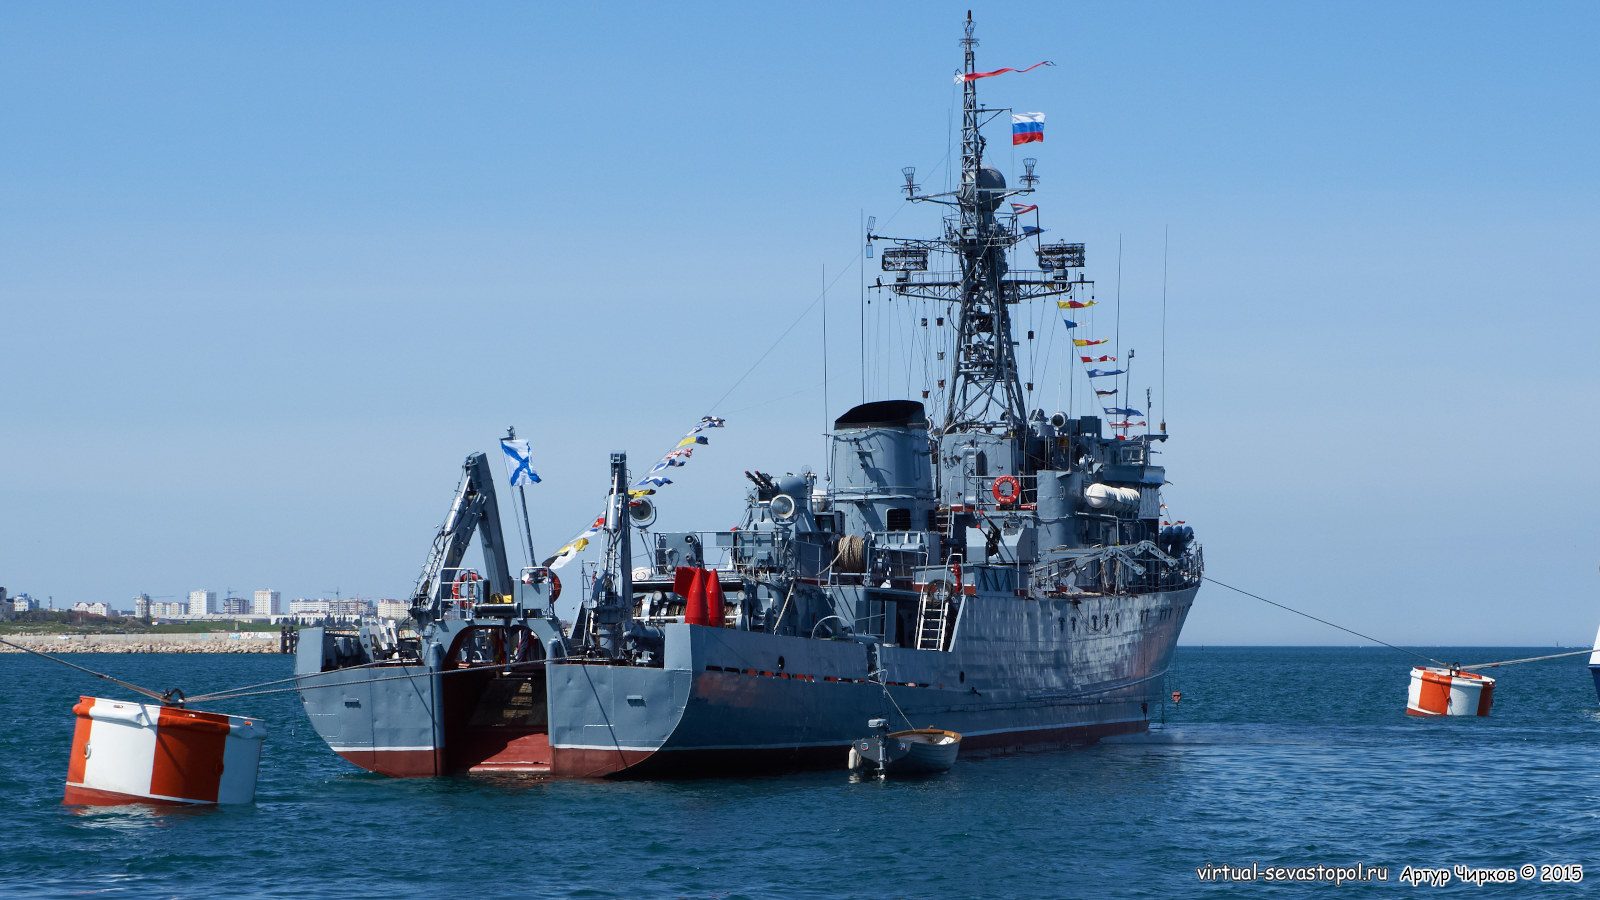 ВМС України у Криму знищили російський корабель “Ковровець” 